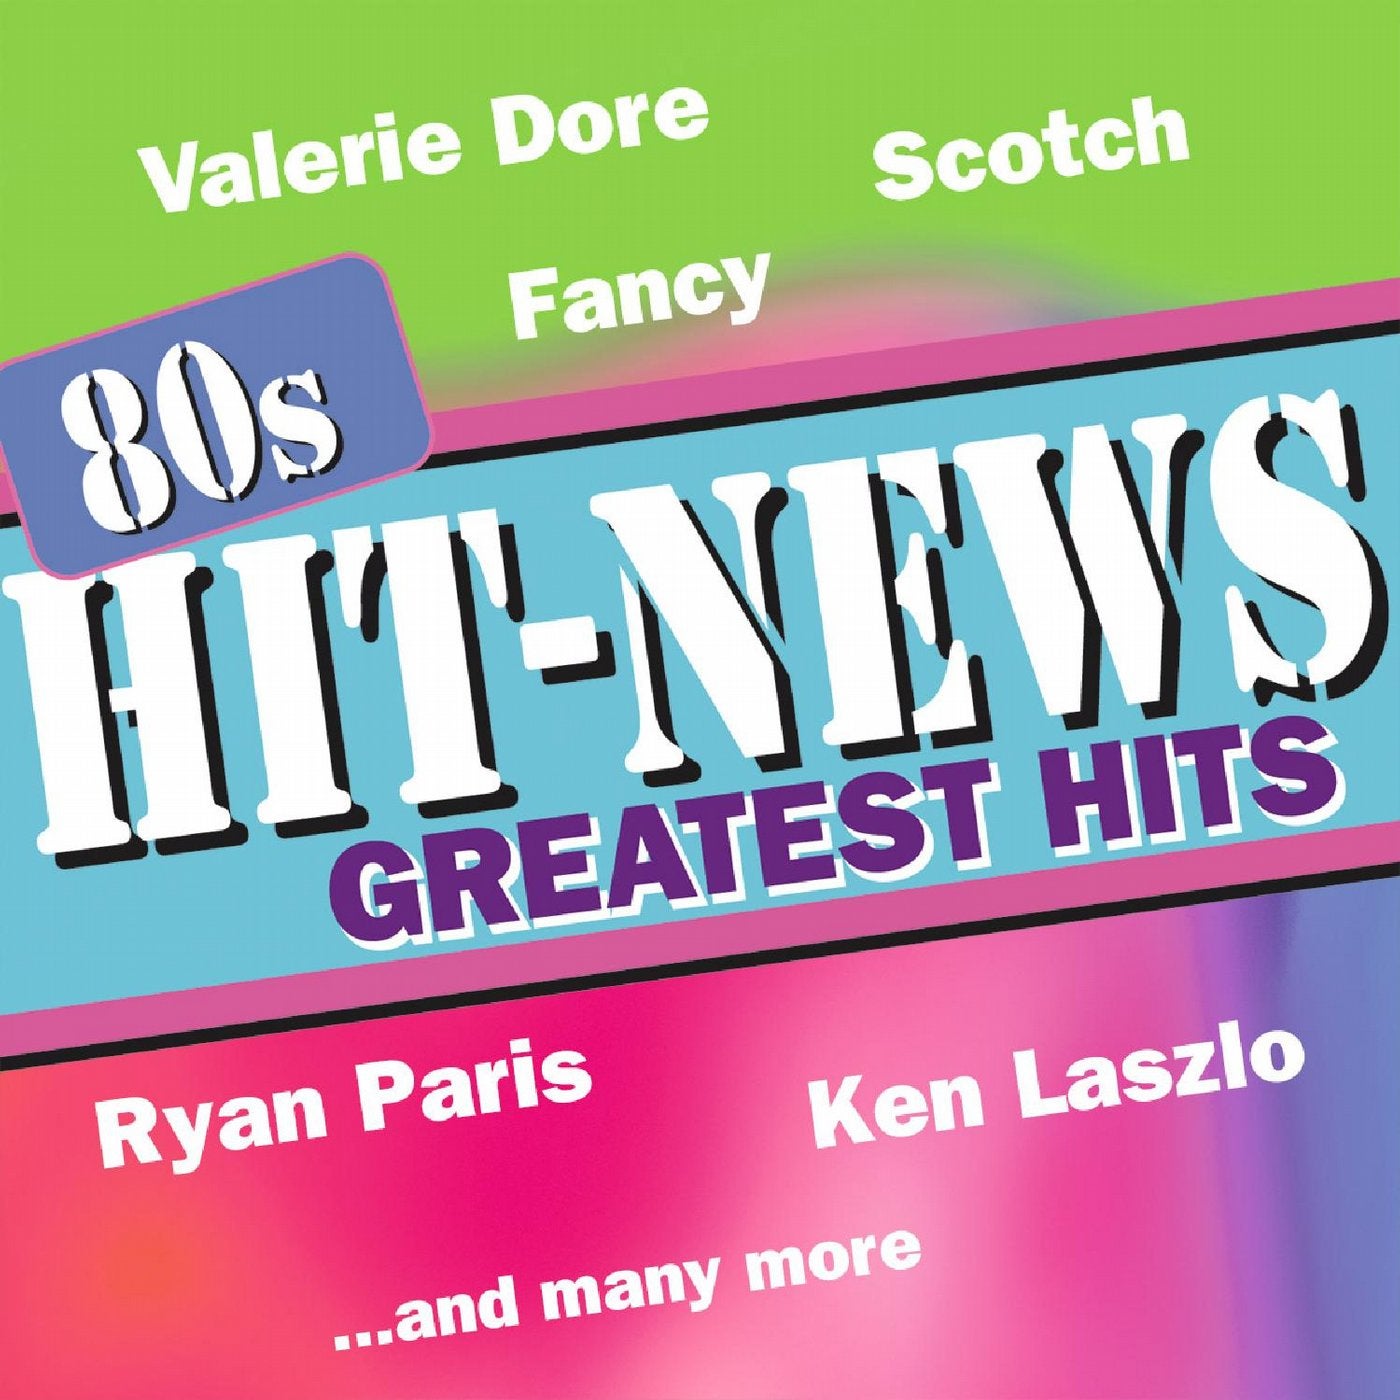 80s Hit News